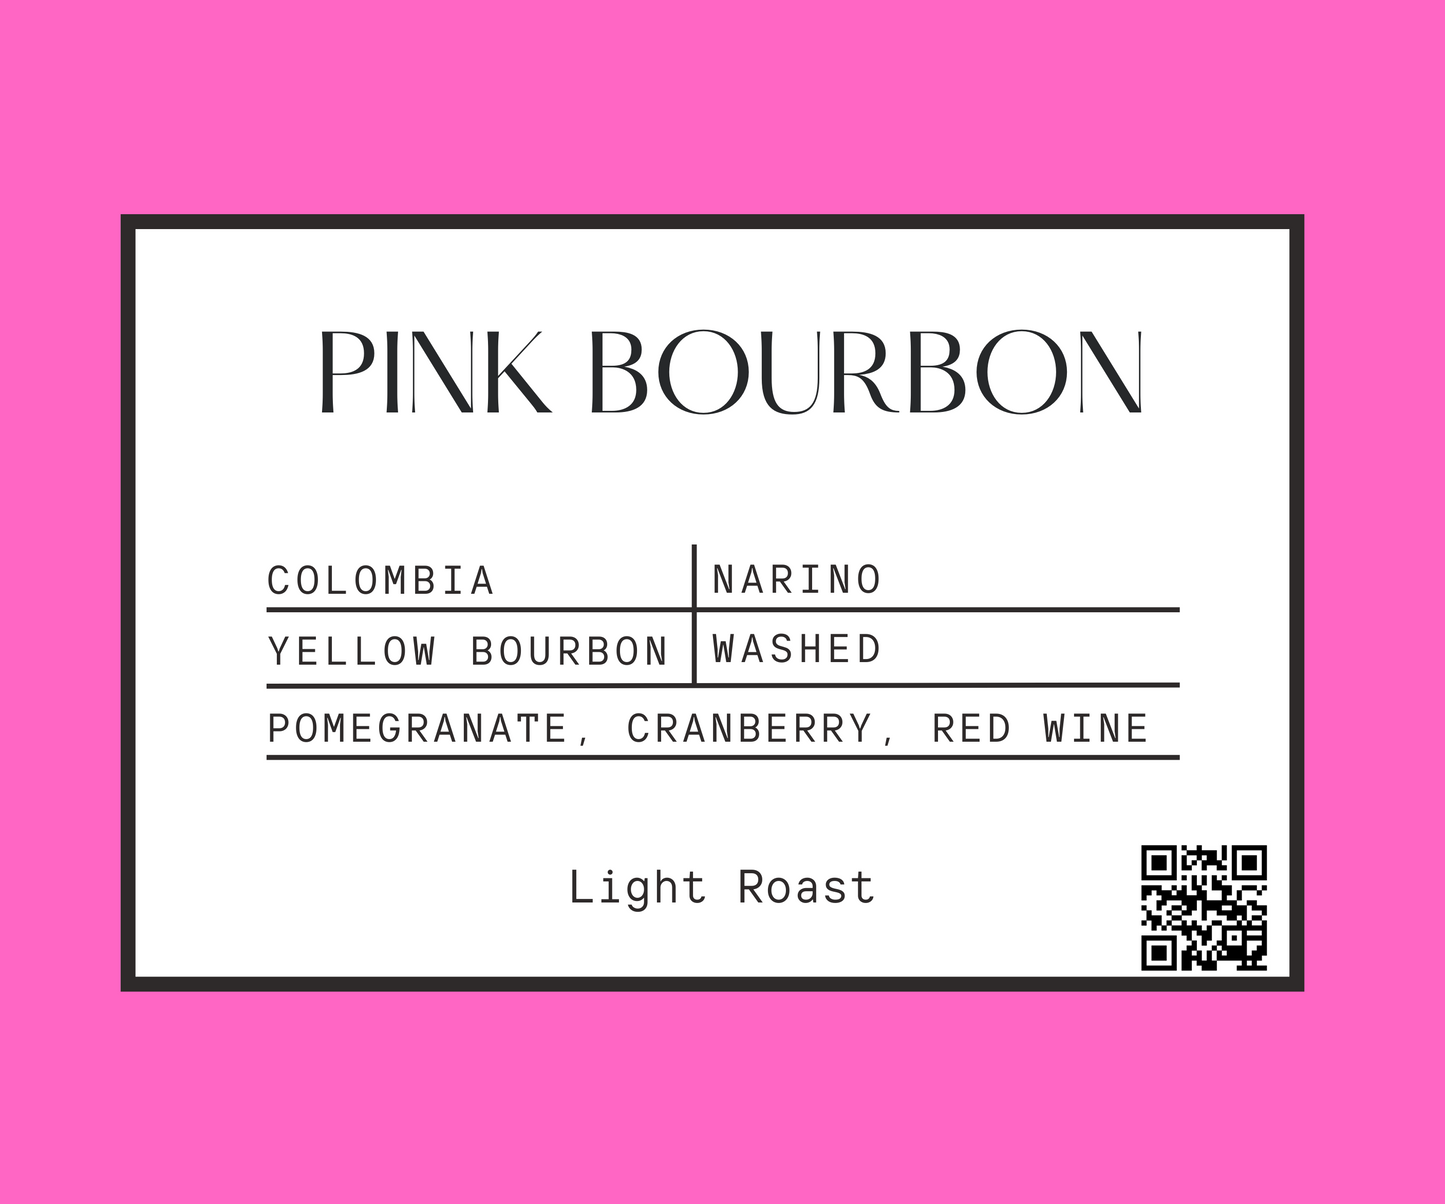 Pink Bourbon